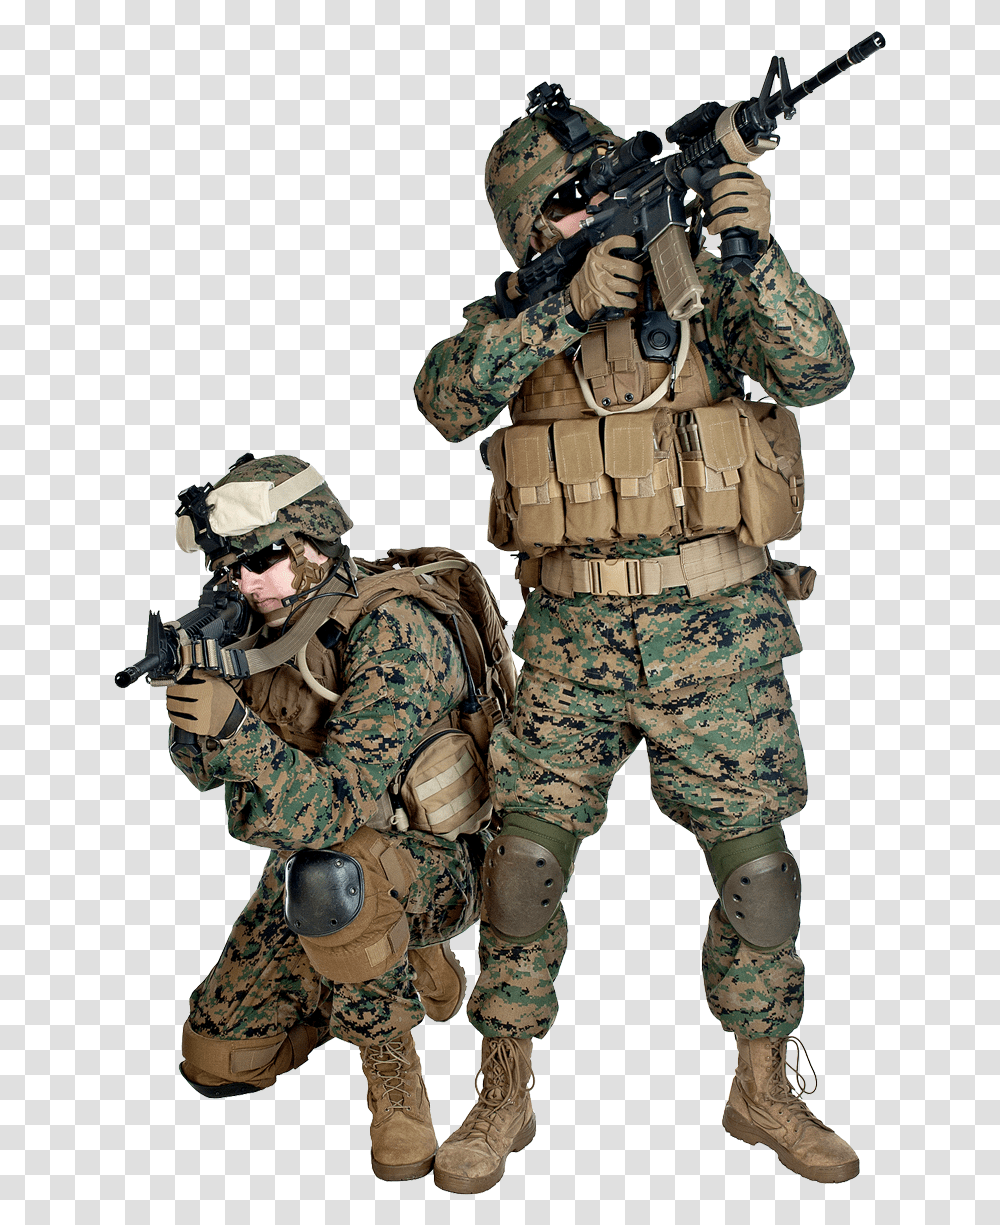 Military Soldier Images Dibujos De Soldados De La Marina, Military Uniform, Person, Helmet Transparent Png